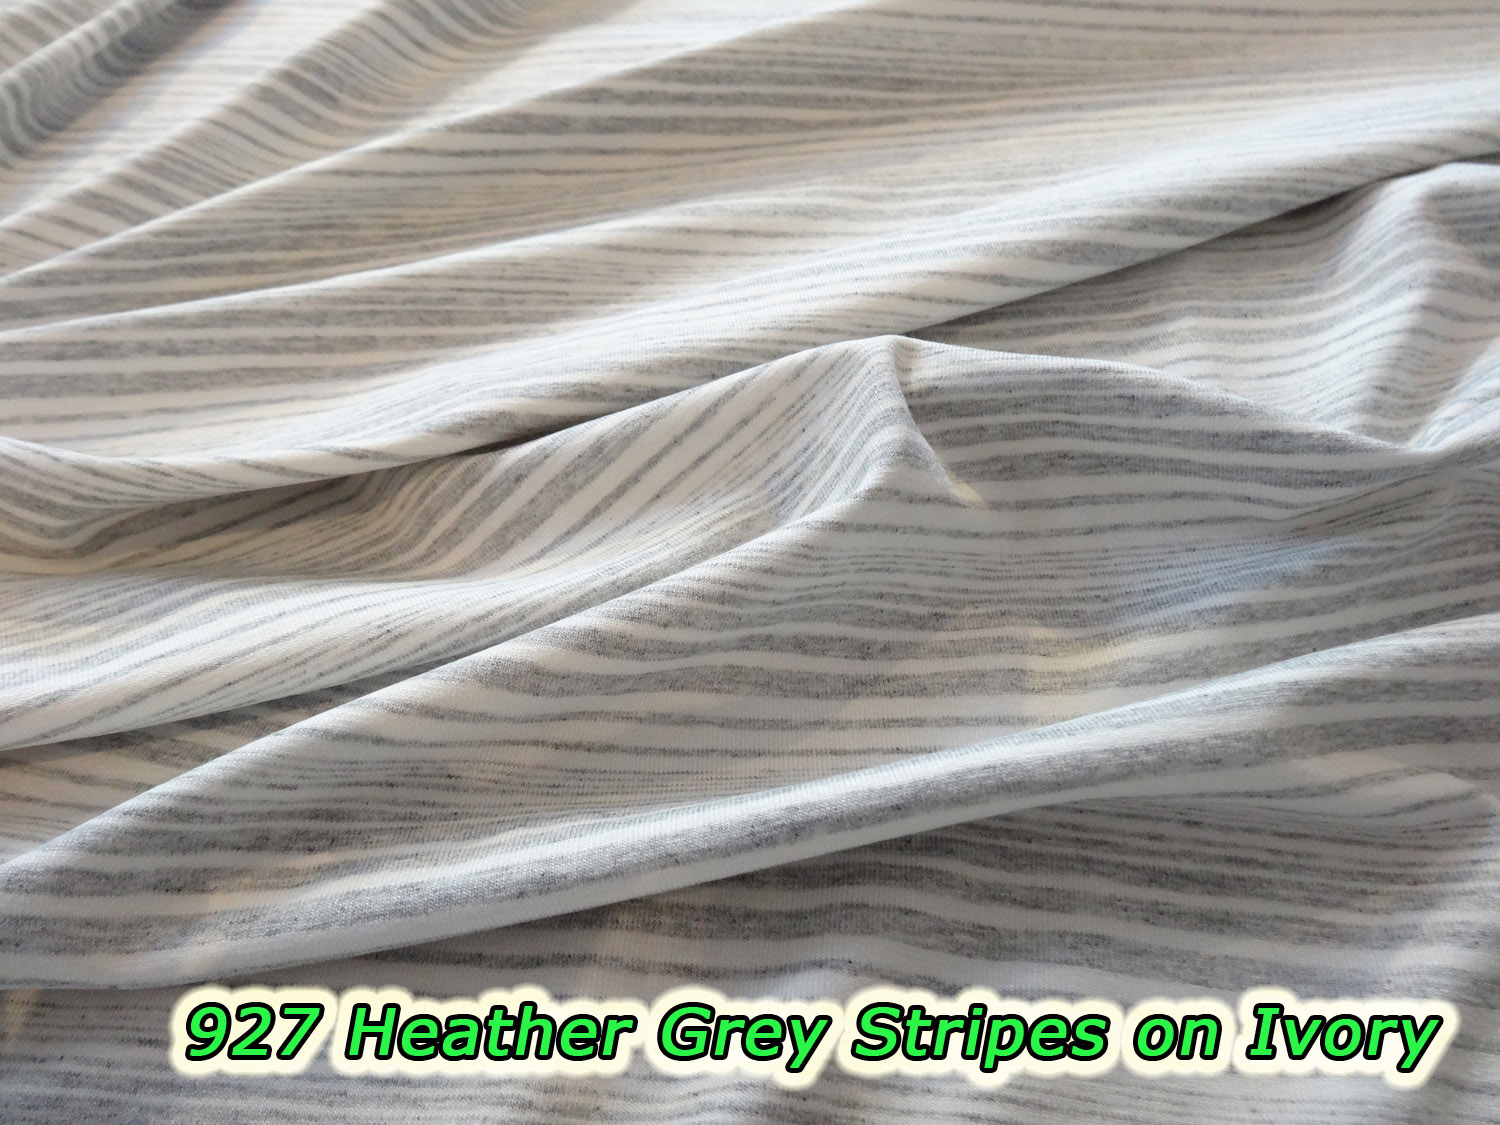 927 Heather Grey Stripes on Ivory